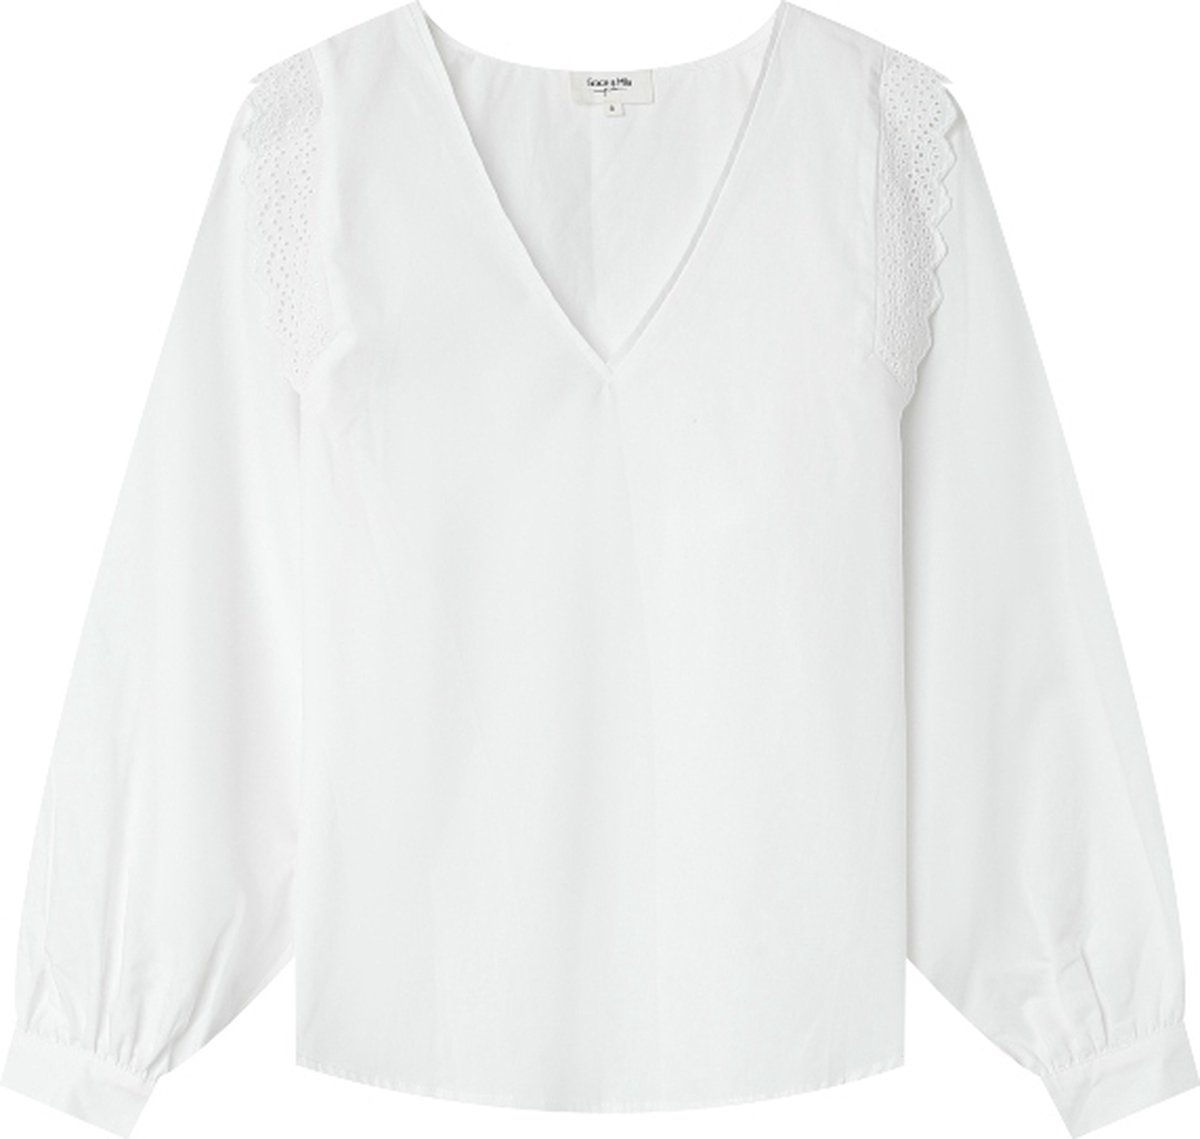 Witte blouse met ruches Geza - Grace & Mila - Maat M